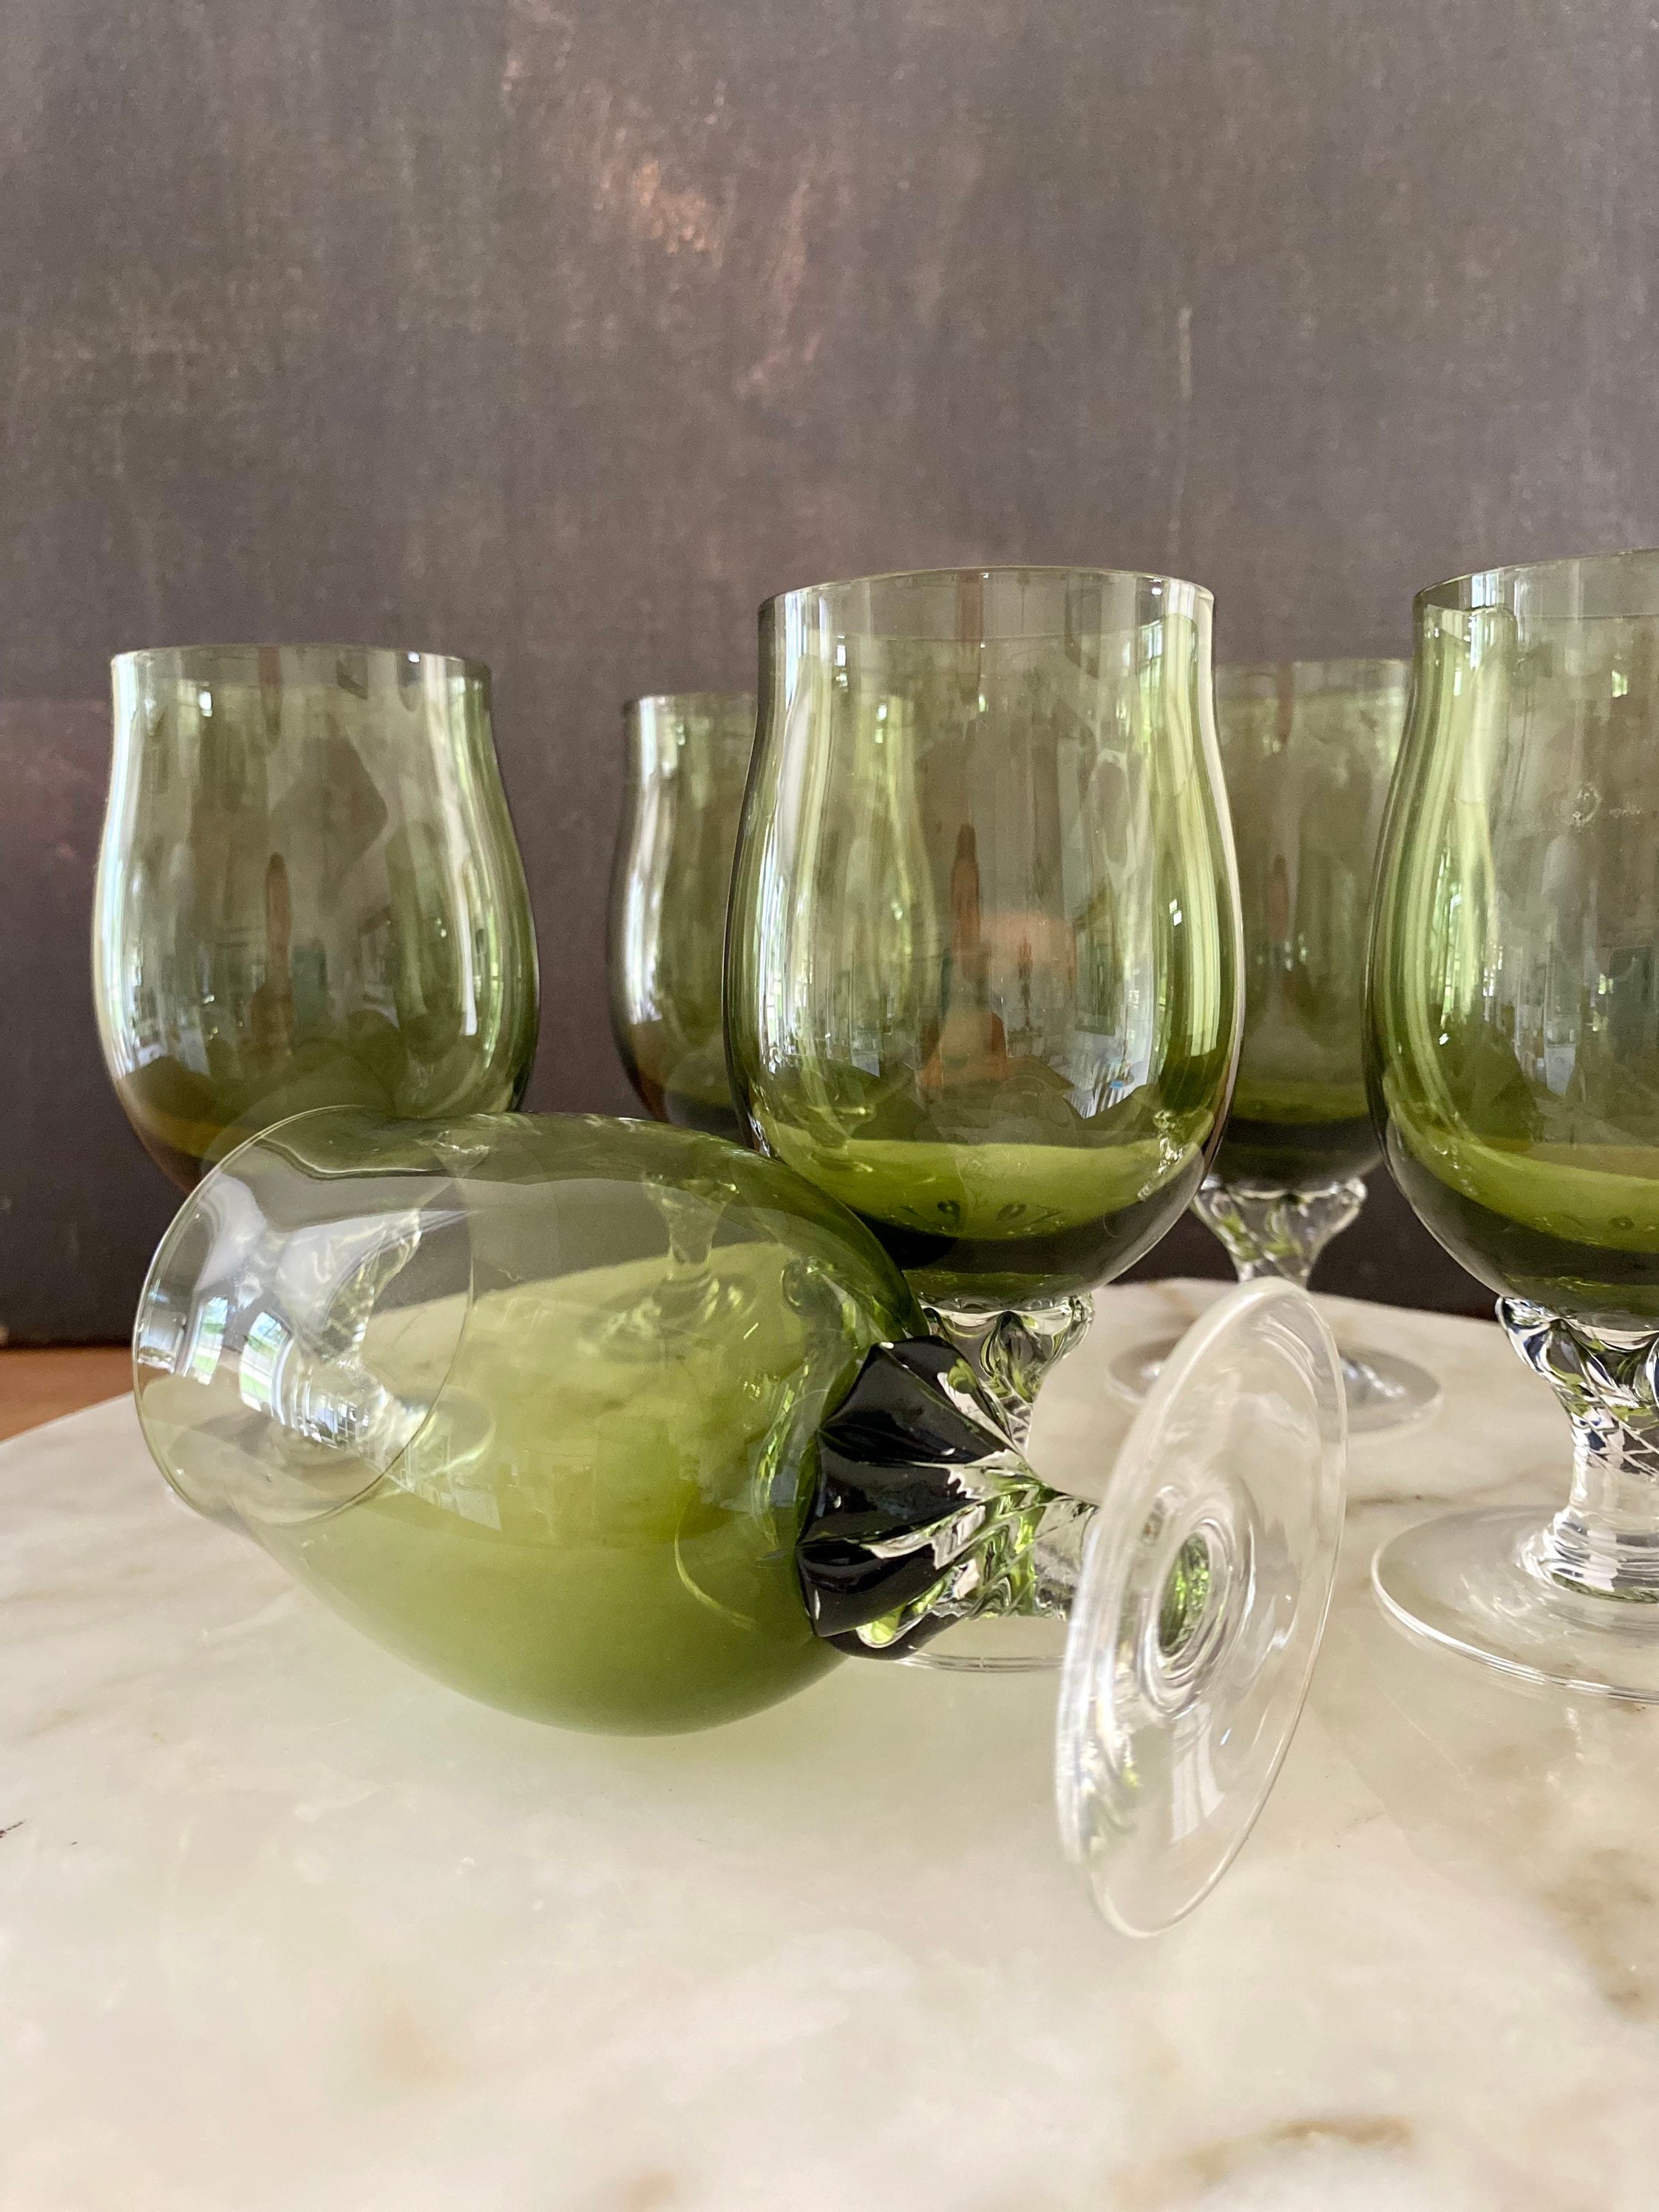 Mid Century Modern Blue AstroShields 15 oz Stemless Wine Glass